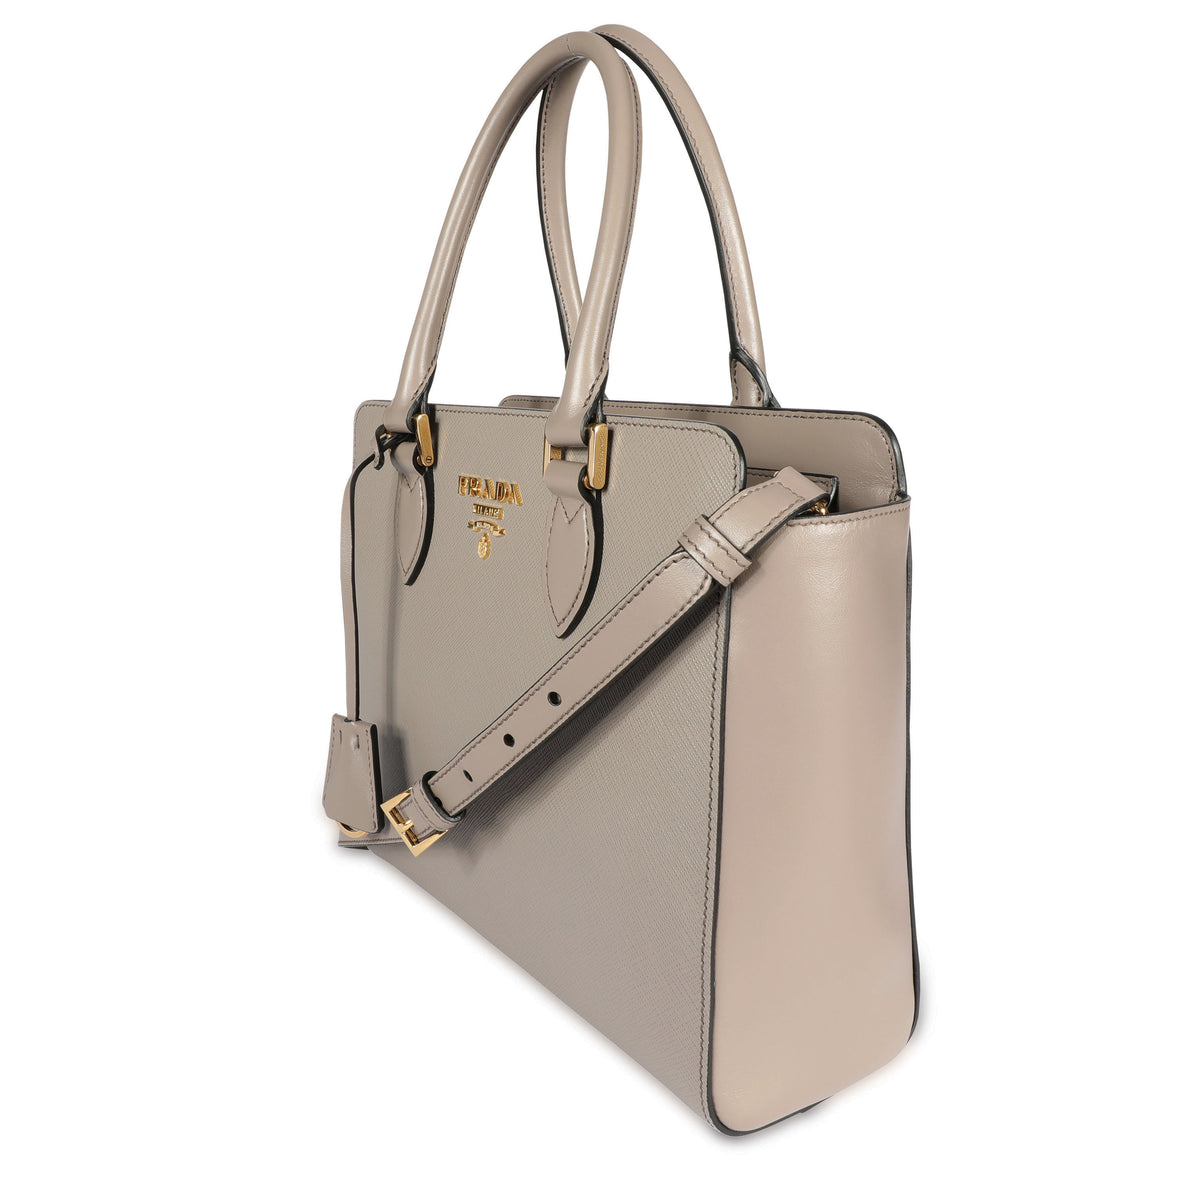 Prada Argilla Saffiano Lux Leather Satchel Handbag